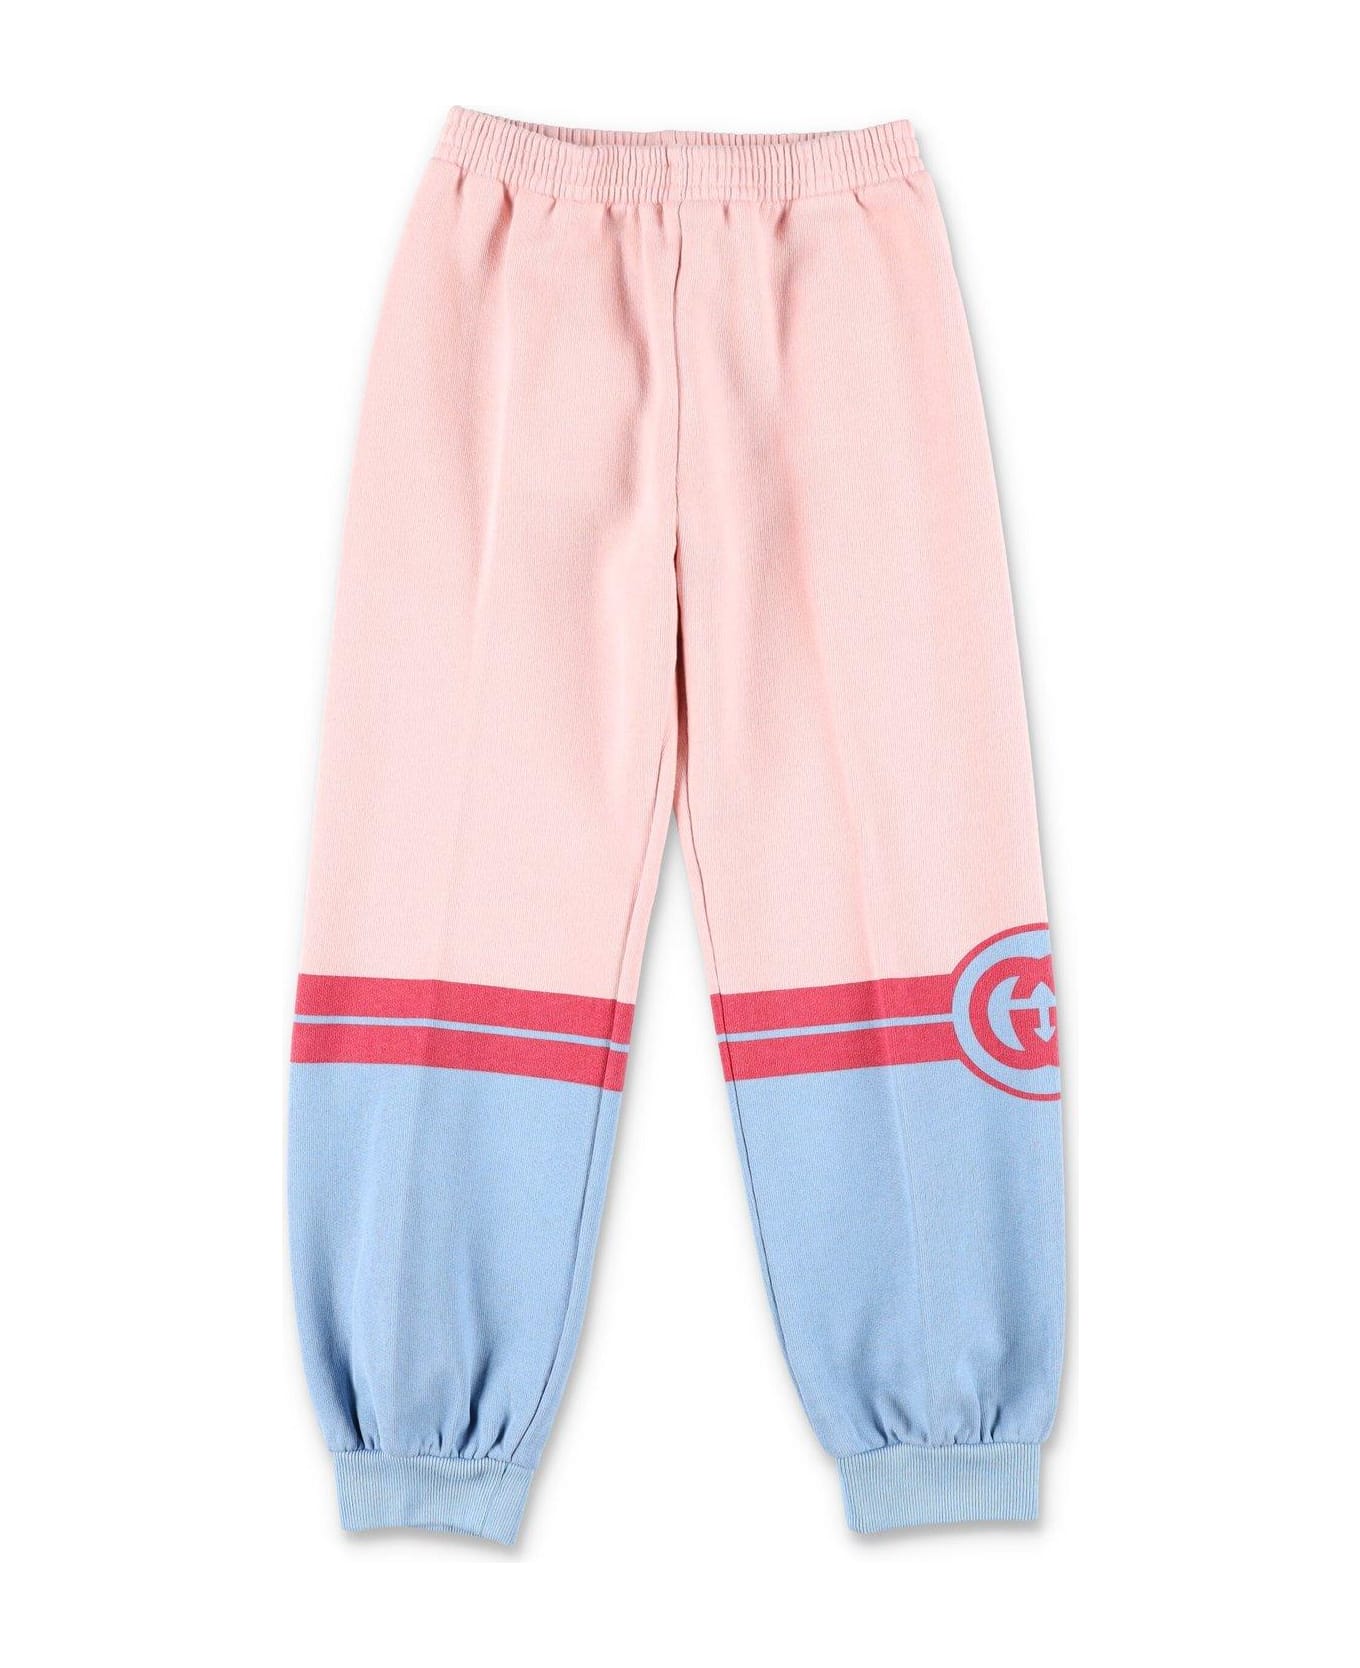 Gucci Clark Interlocking G Printed Jersey Track Pants - Pink